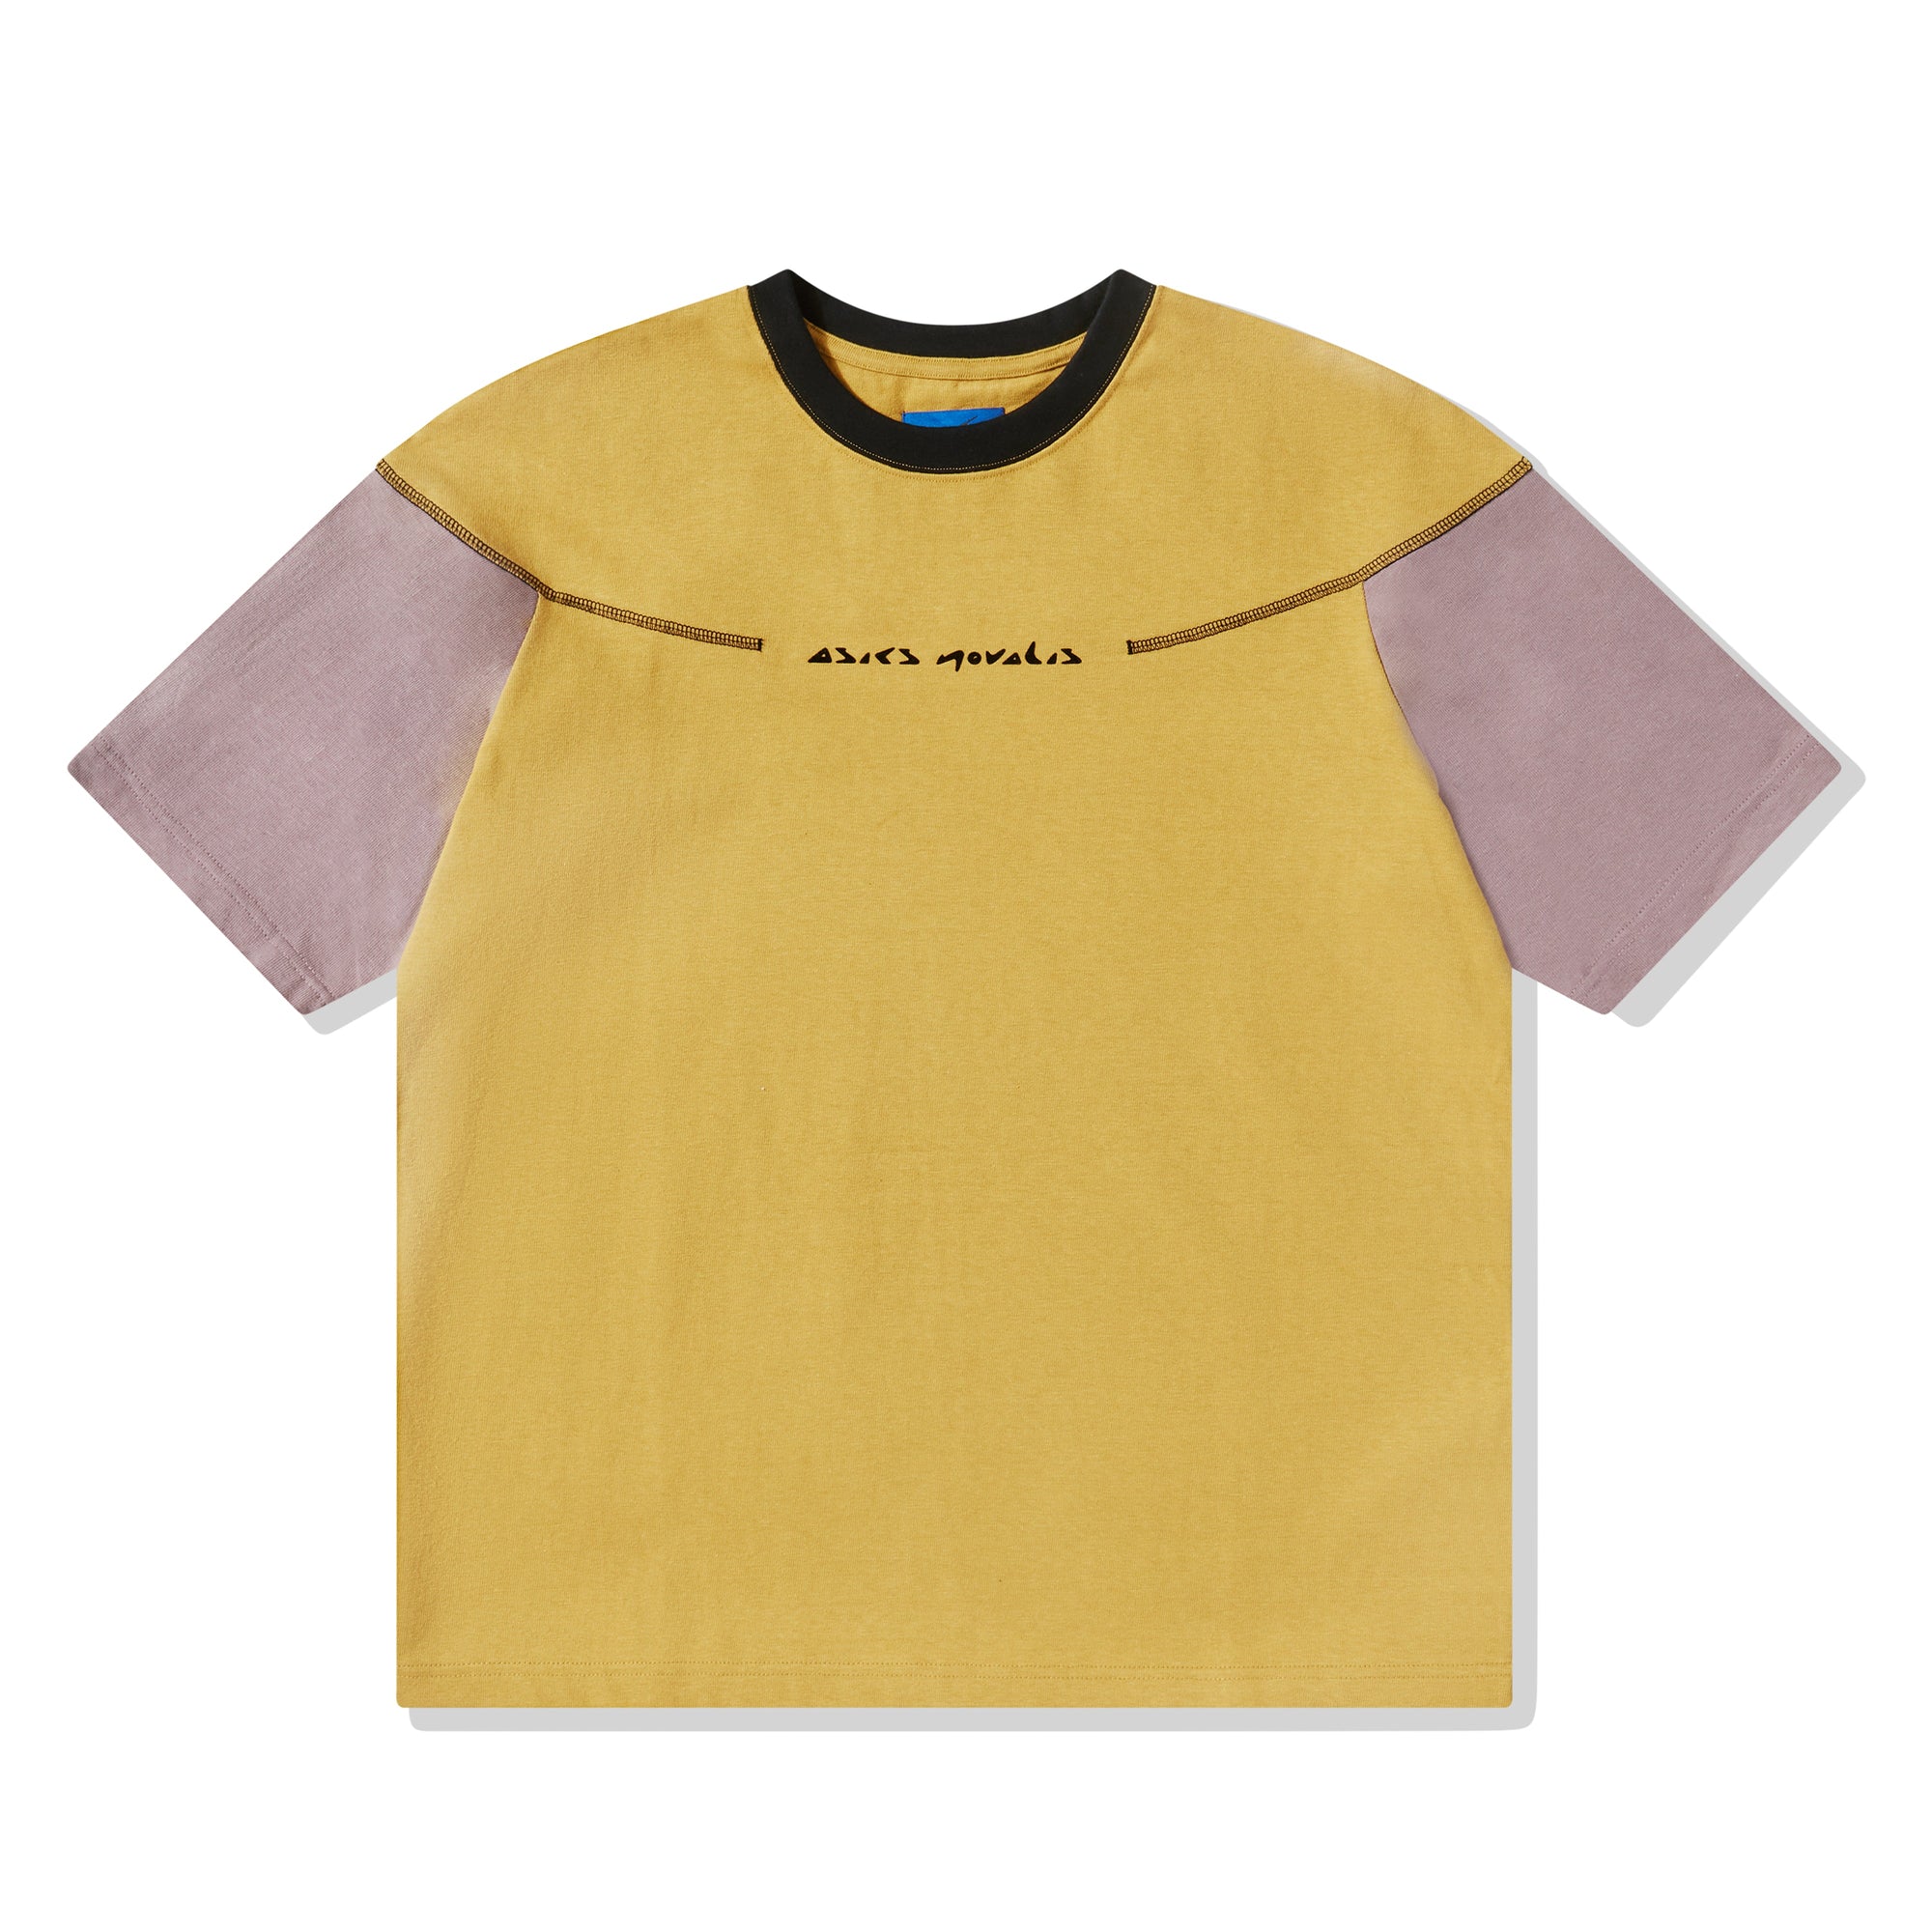 Asics Novalis - Bixance T-Shirt - (Medallion Yellow / Obsidian Black) view 1